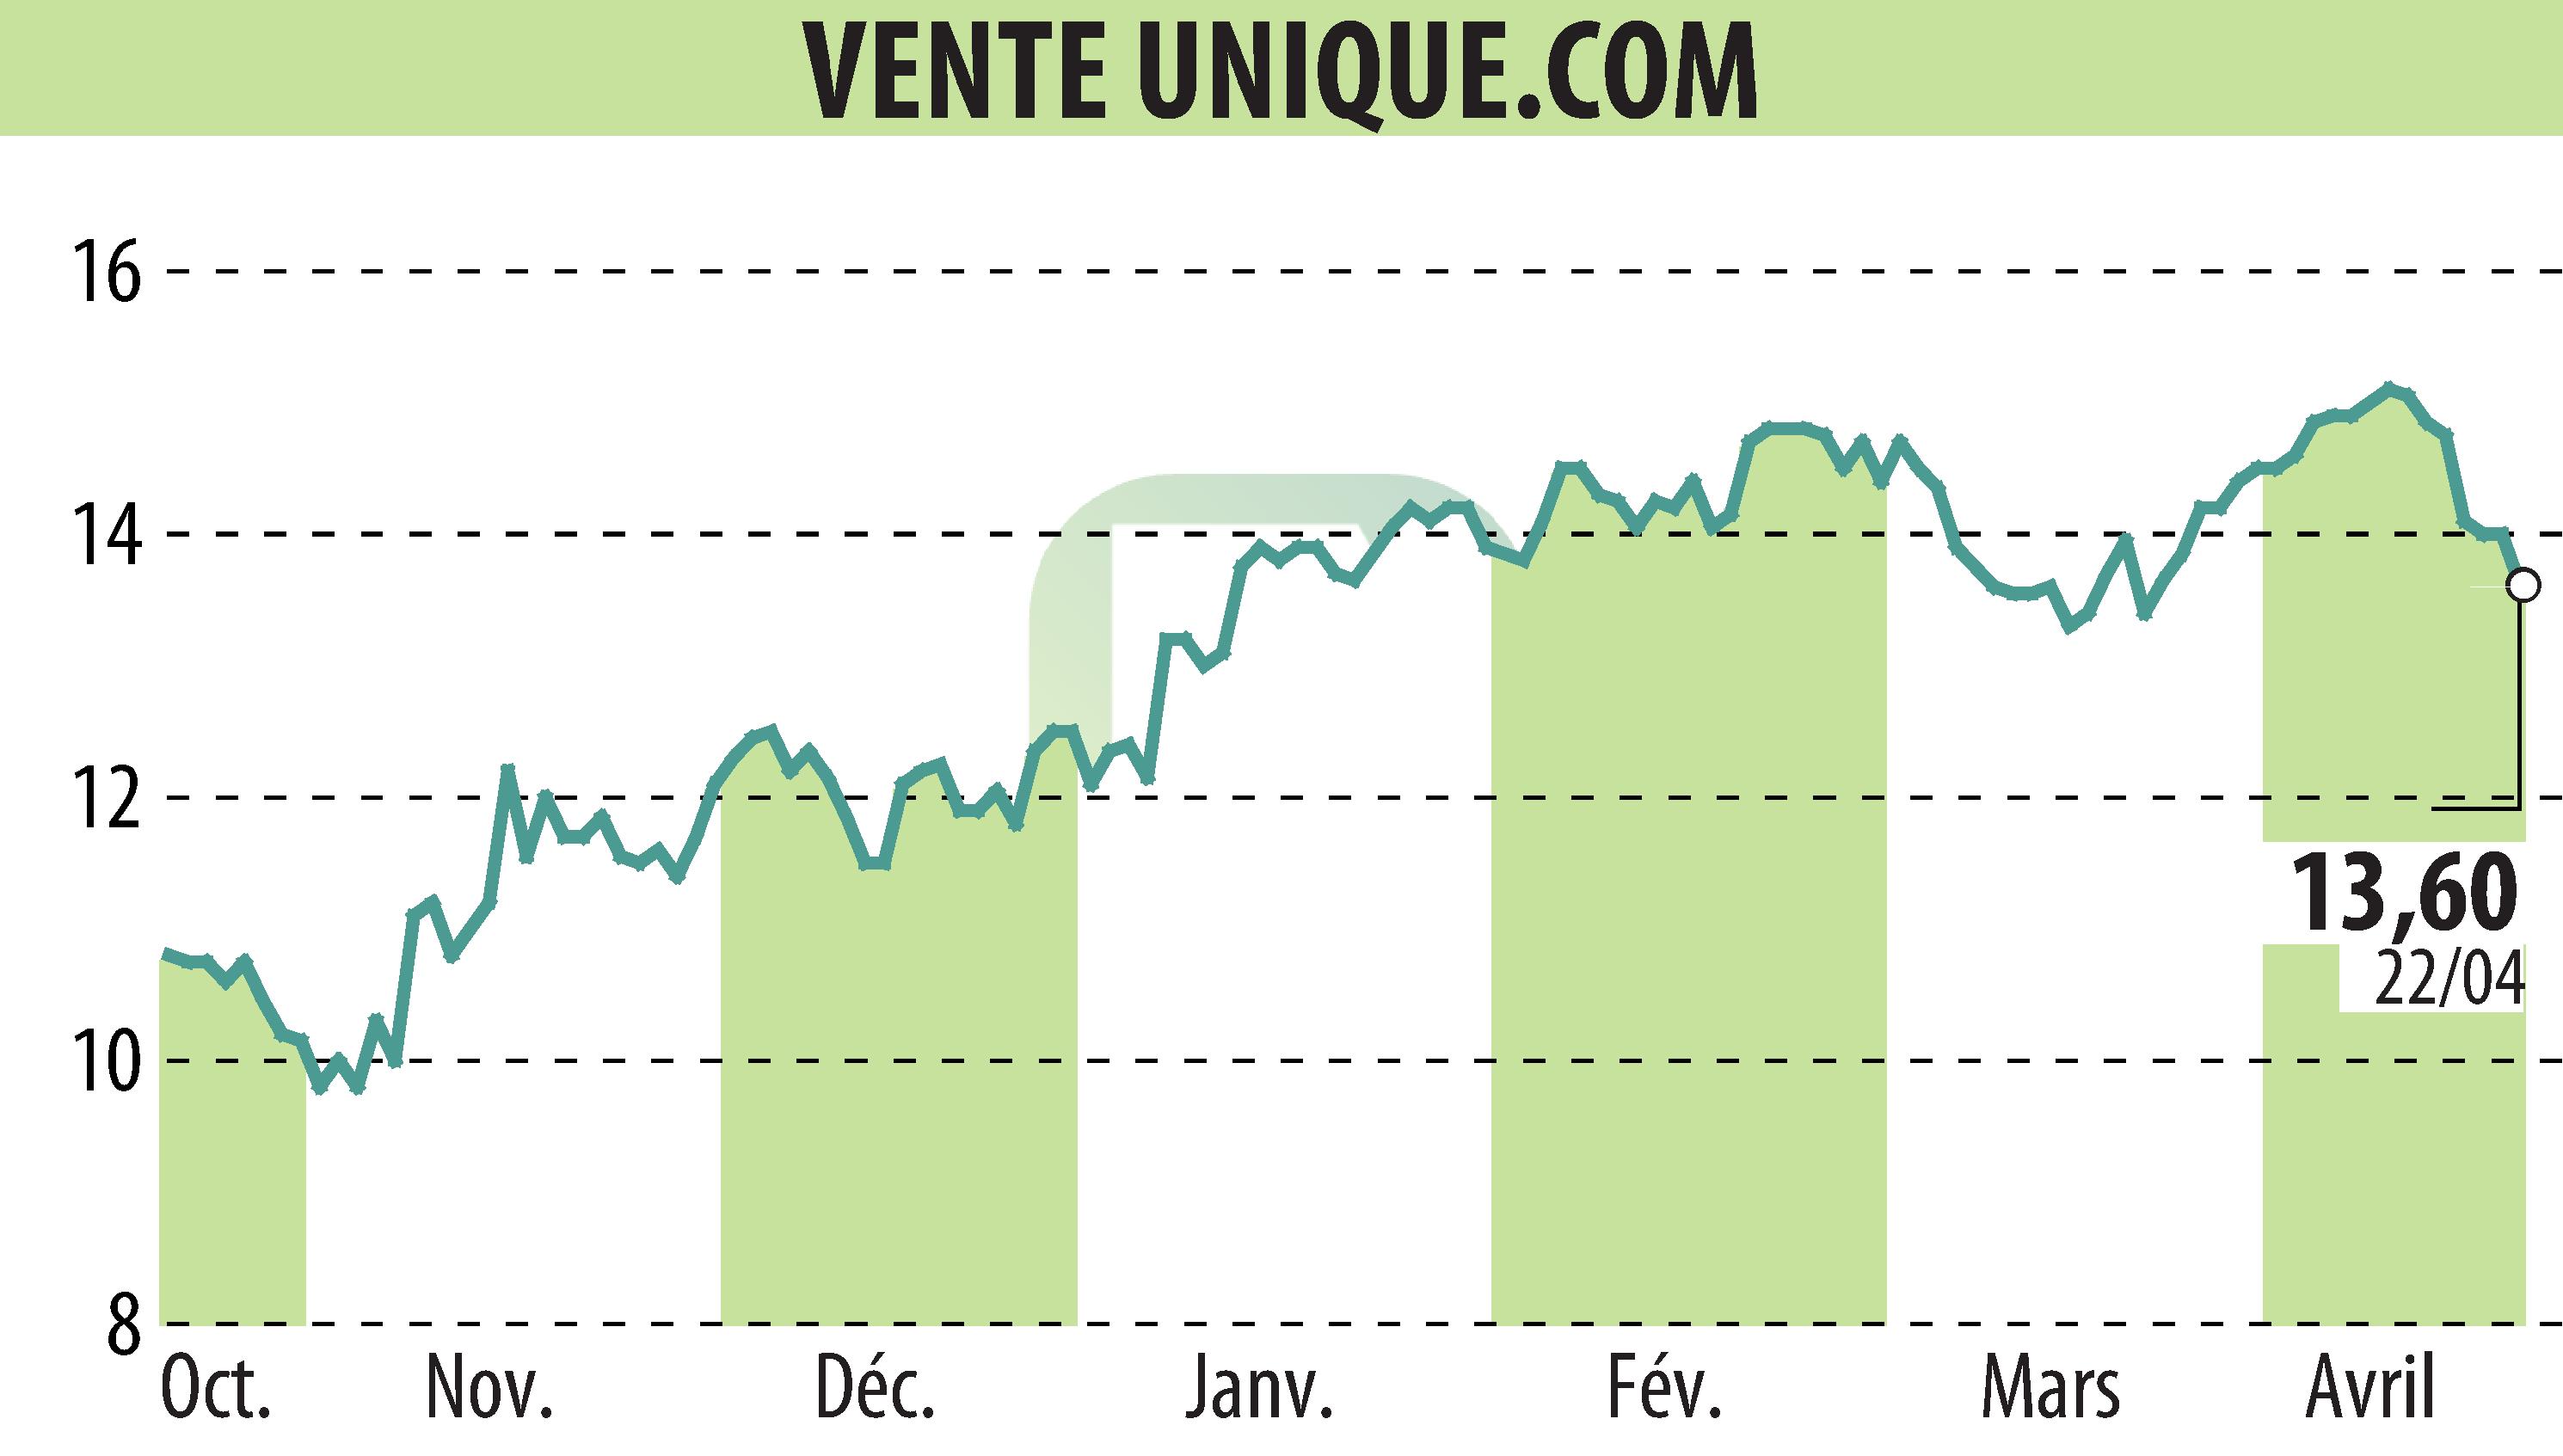 Stock price chart of VENTE UNIQUE.COM (EPA:ALVU) showing fluctuations.